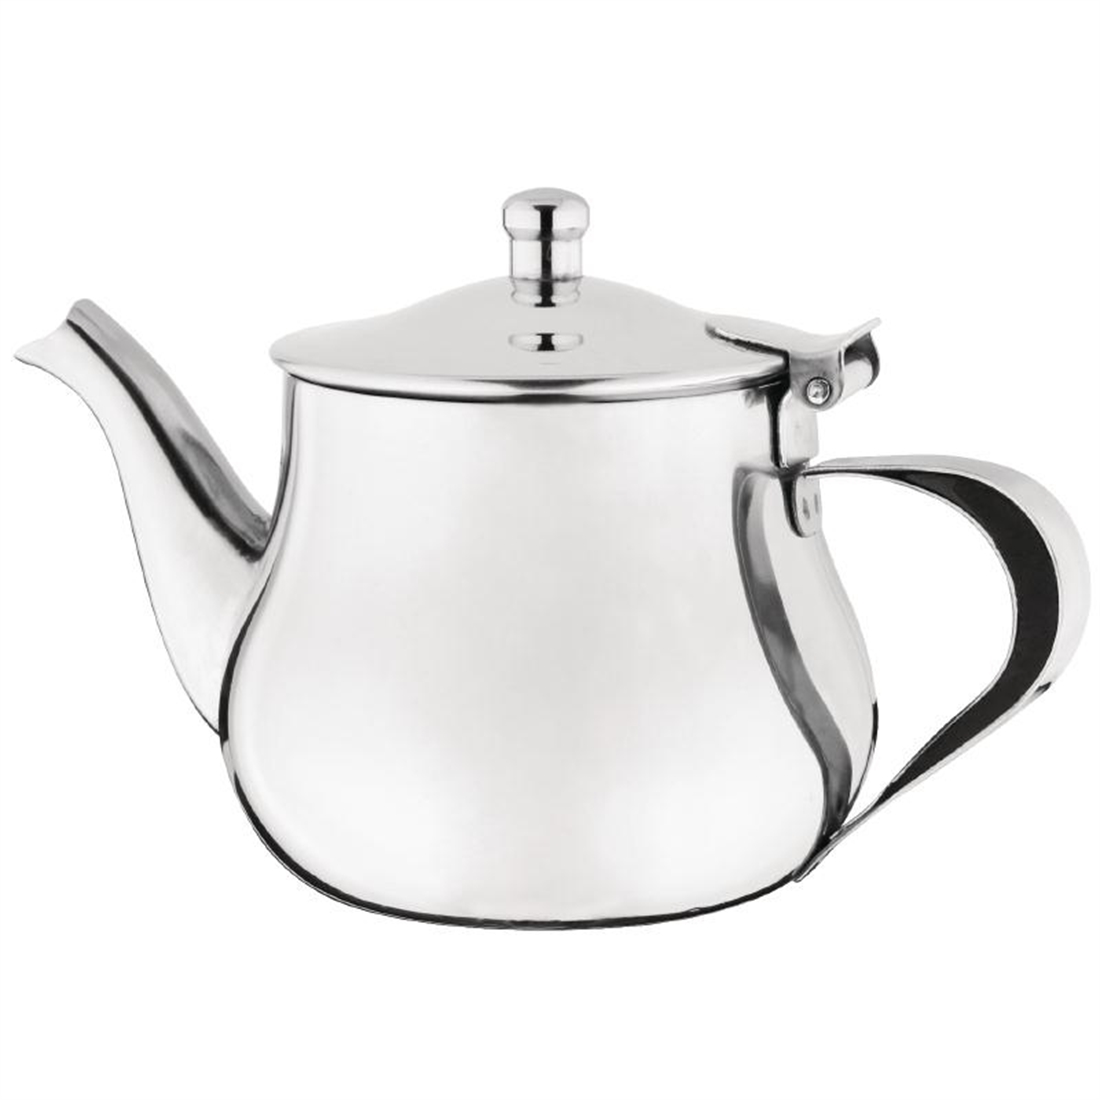 Olympia Arabian Teapot Stainless Steel 13oz by Olympia-C458 - Smart ...